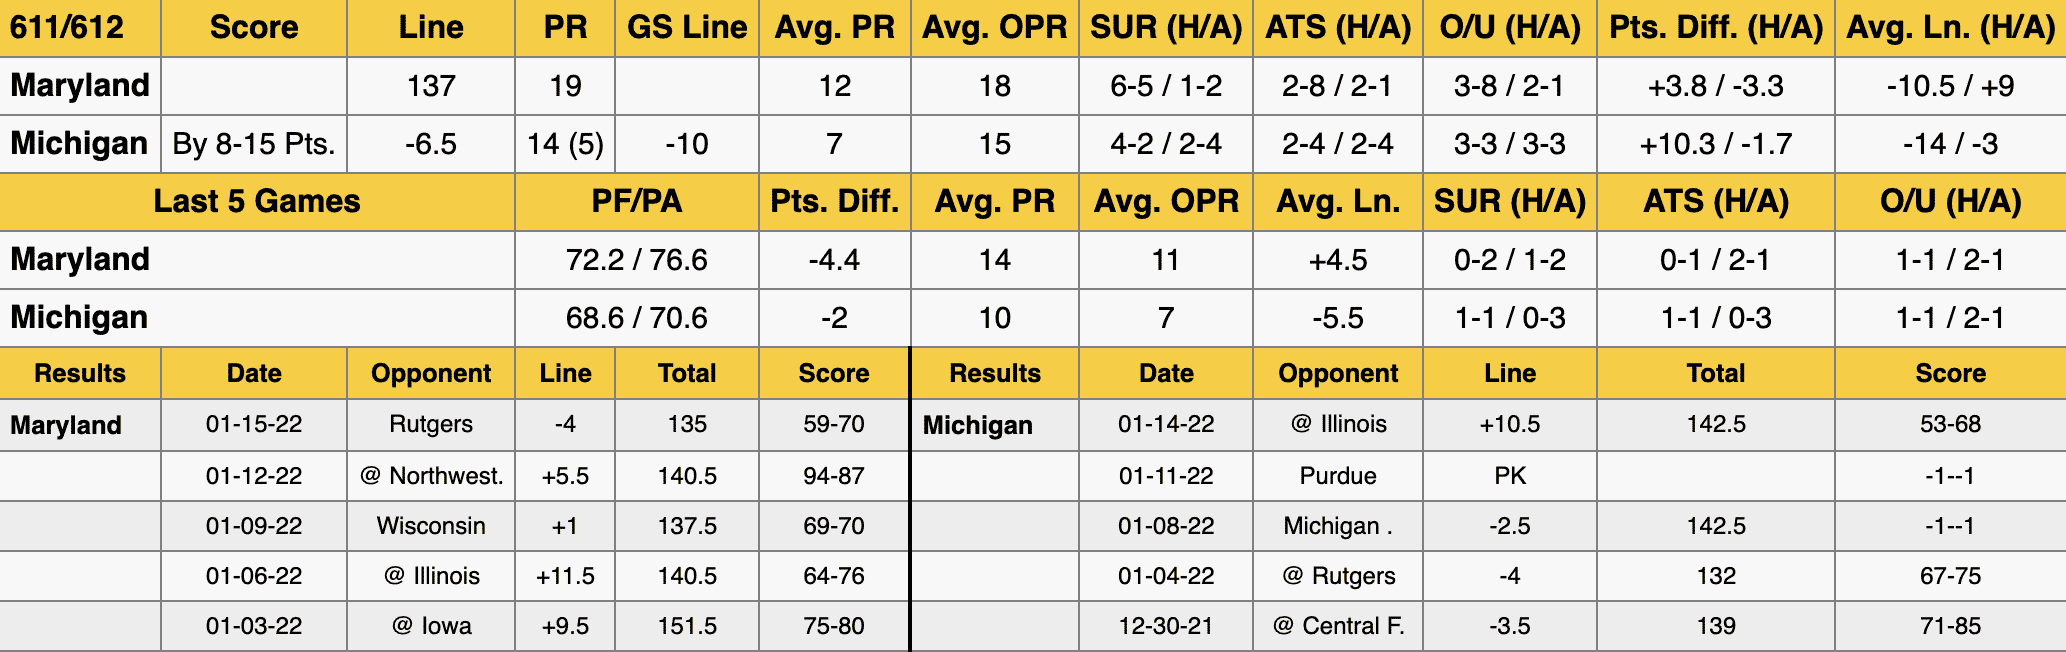 Michigan vs Maryland Stats Jan 18